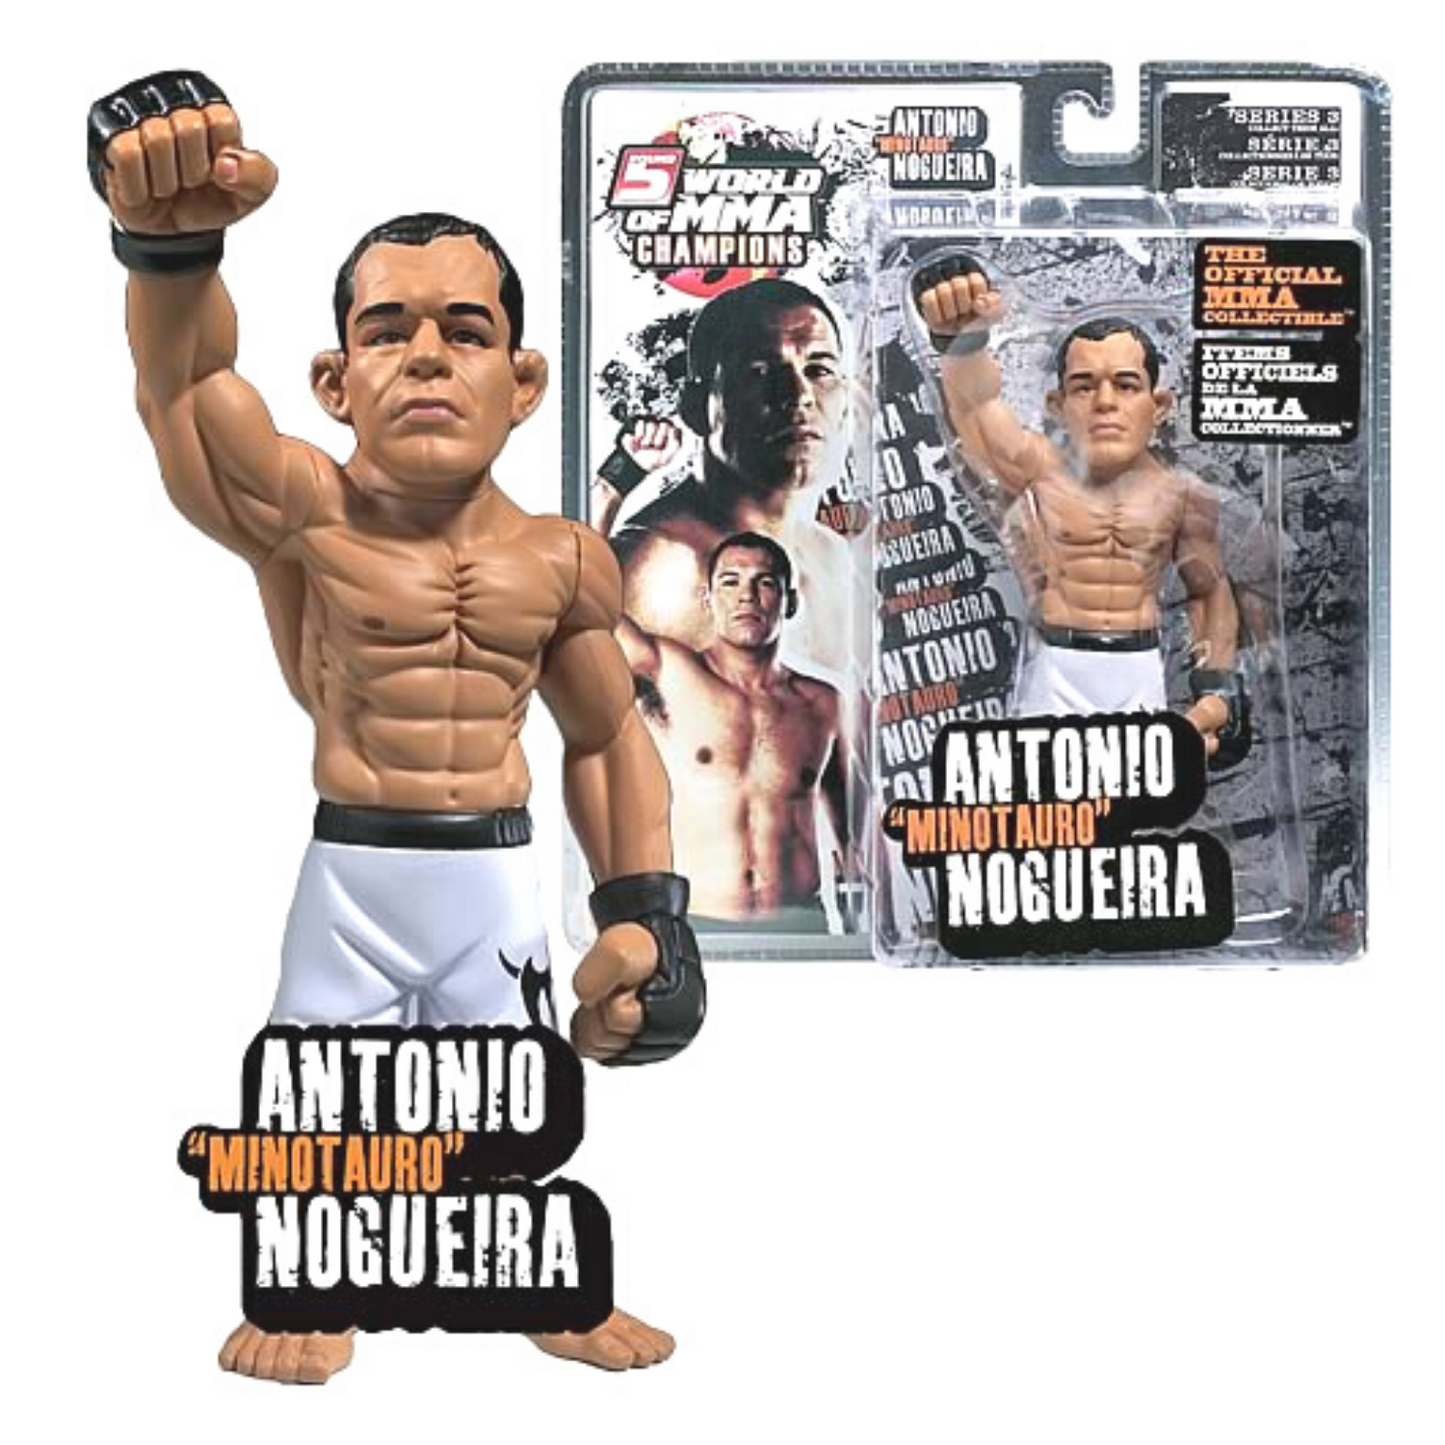 Round 5 UFC Antonio Rodrigo “Minotauro” Nogueira World of MMA Action Figure